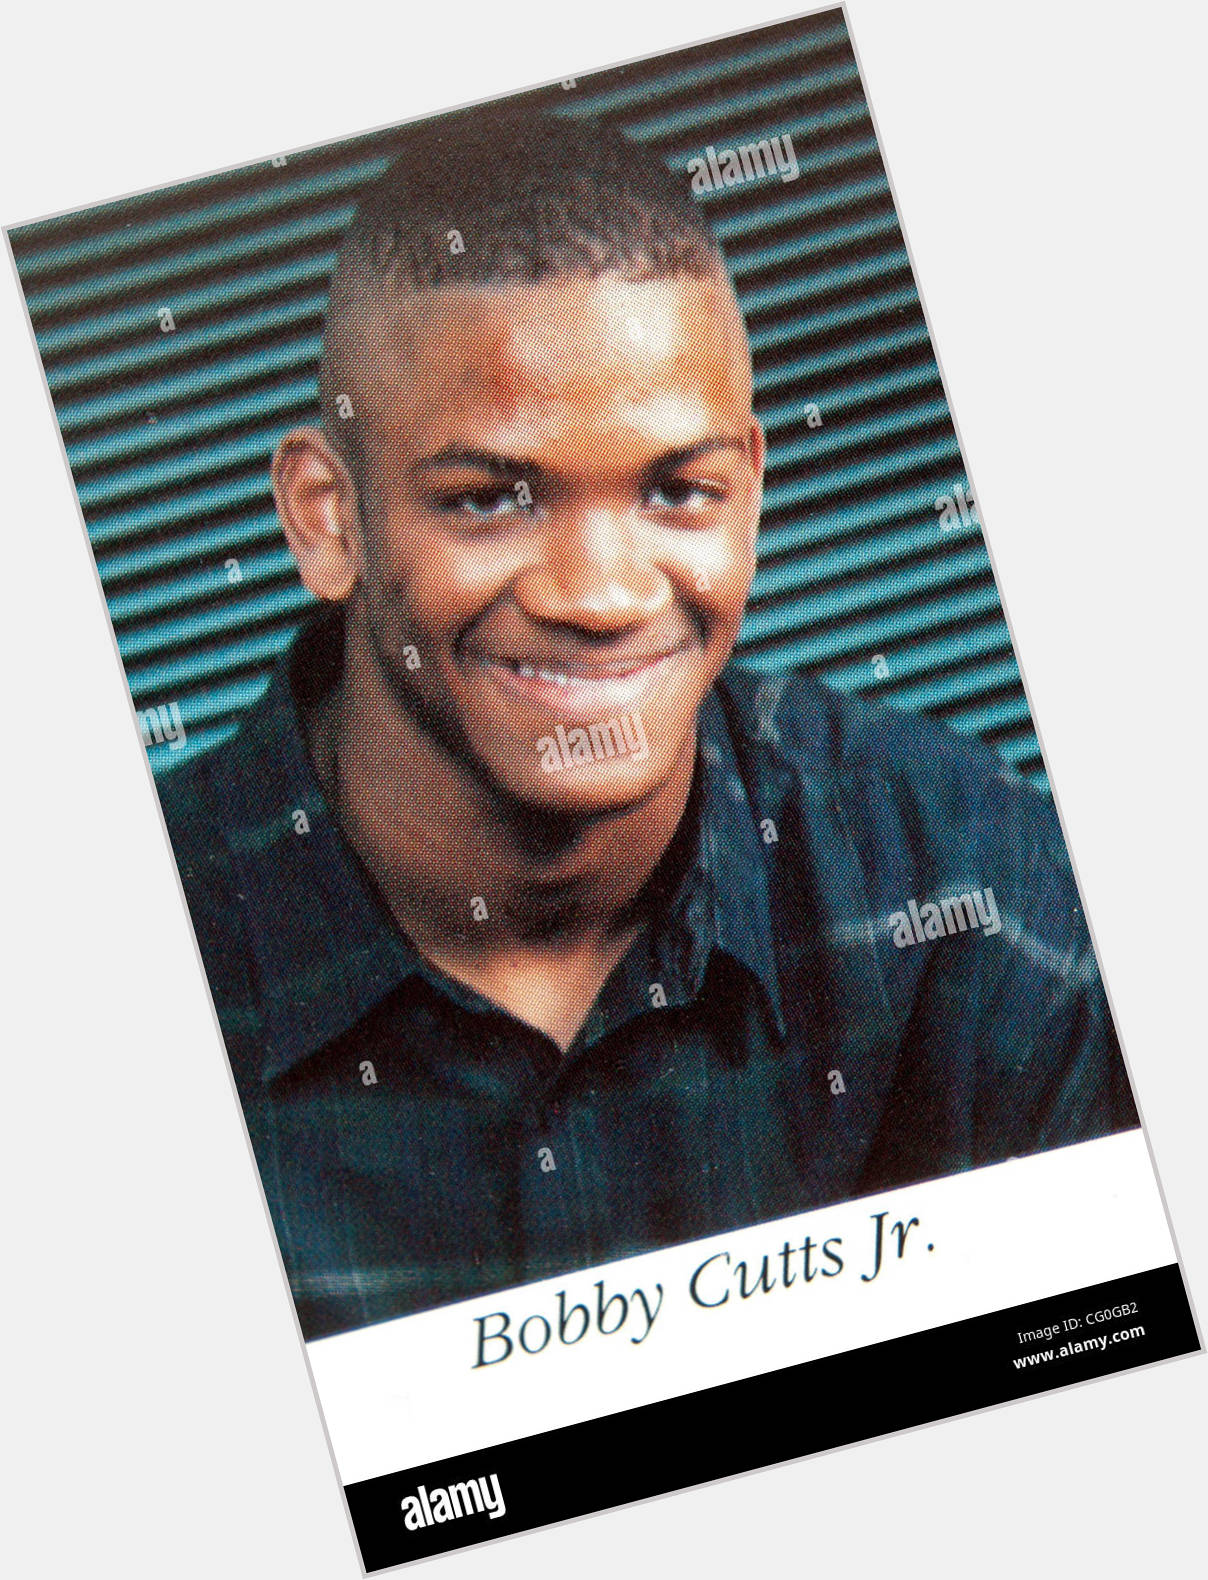 Https://fanpagepress.net/m/B/Bobby Cutts Jr Young 3